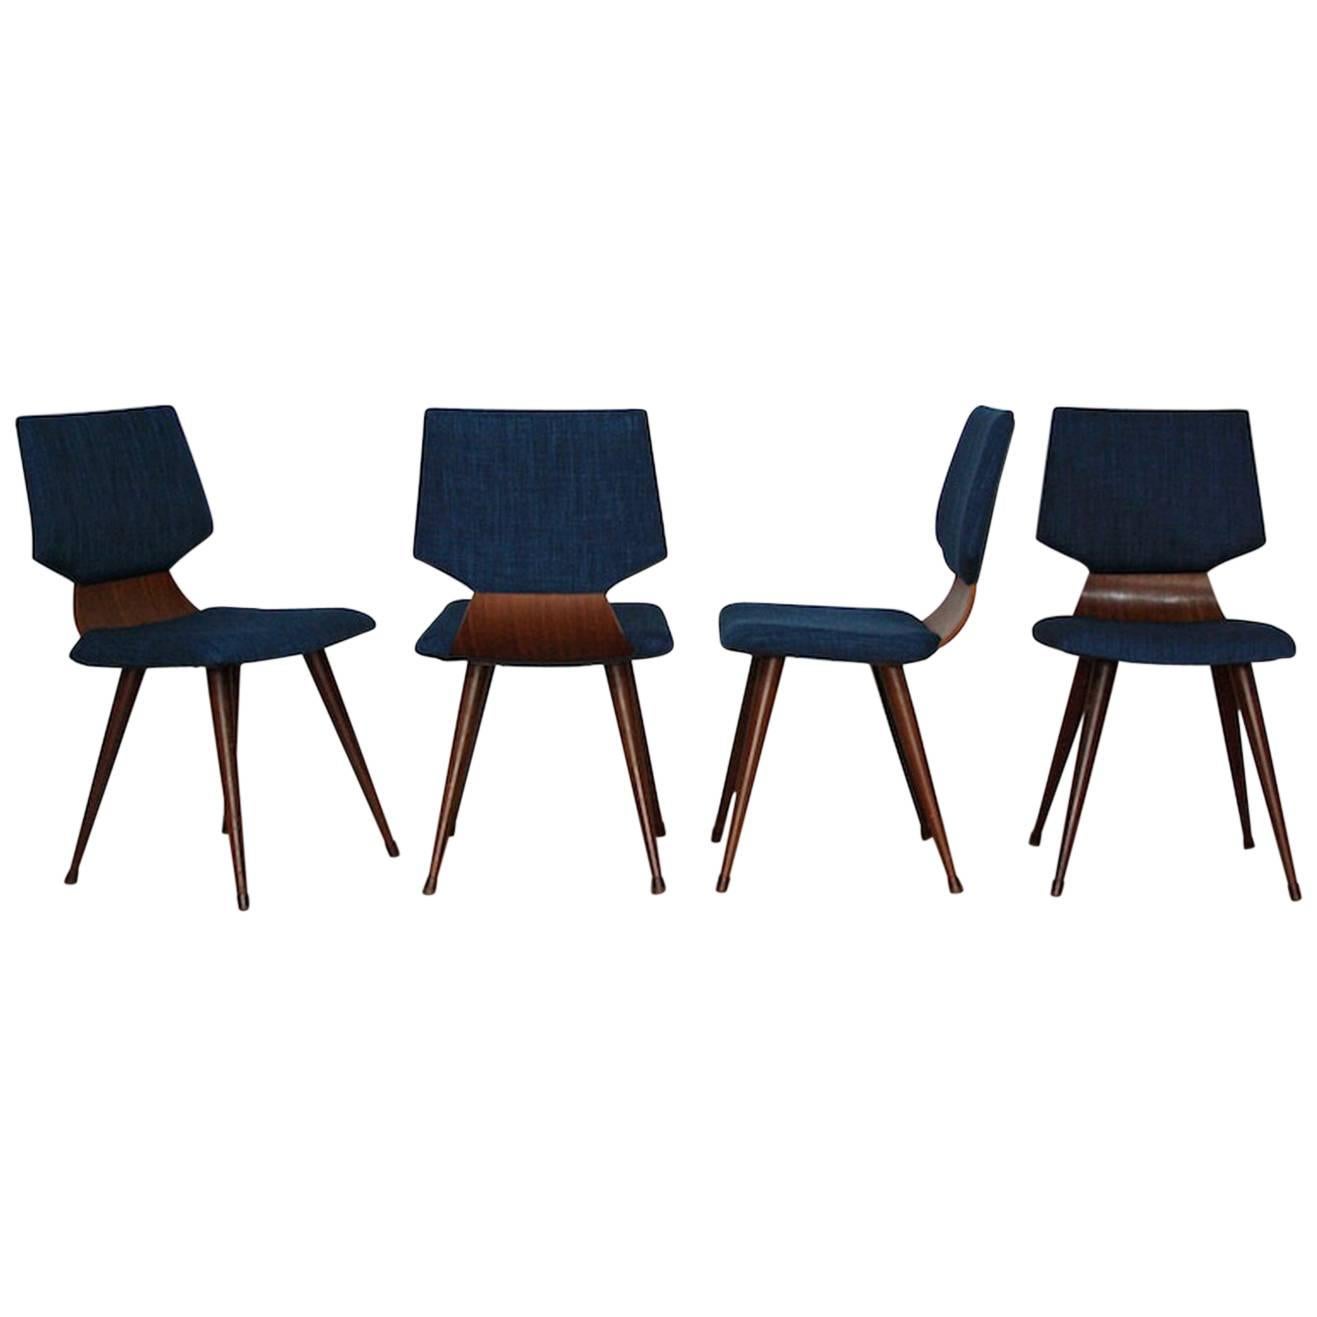 Set of Four Mid-Century Plywood Dining Chair Cor Alon, Dutch Design, 1960s